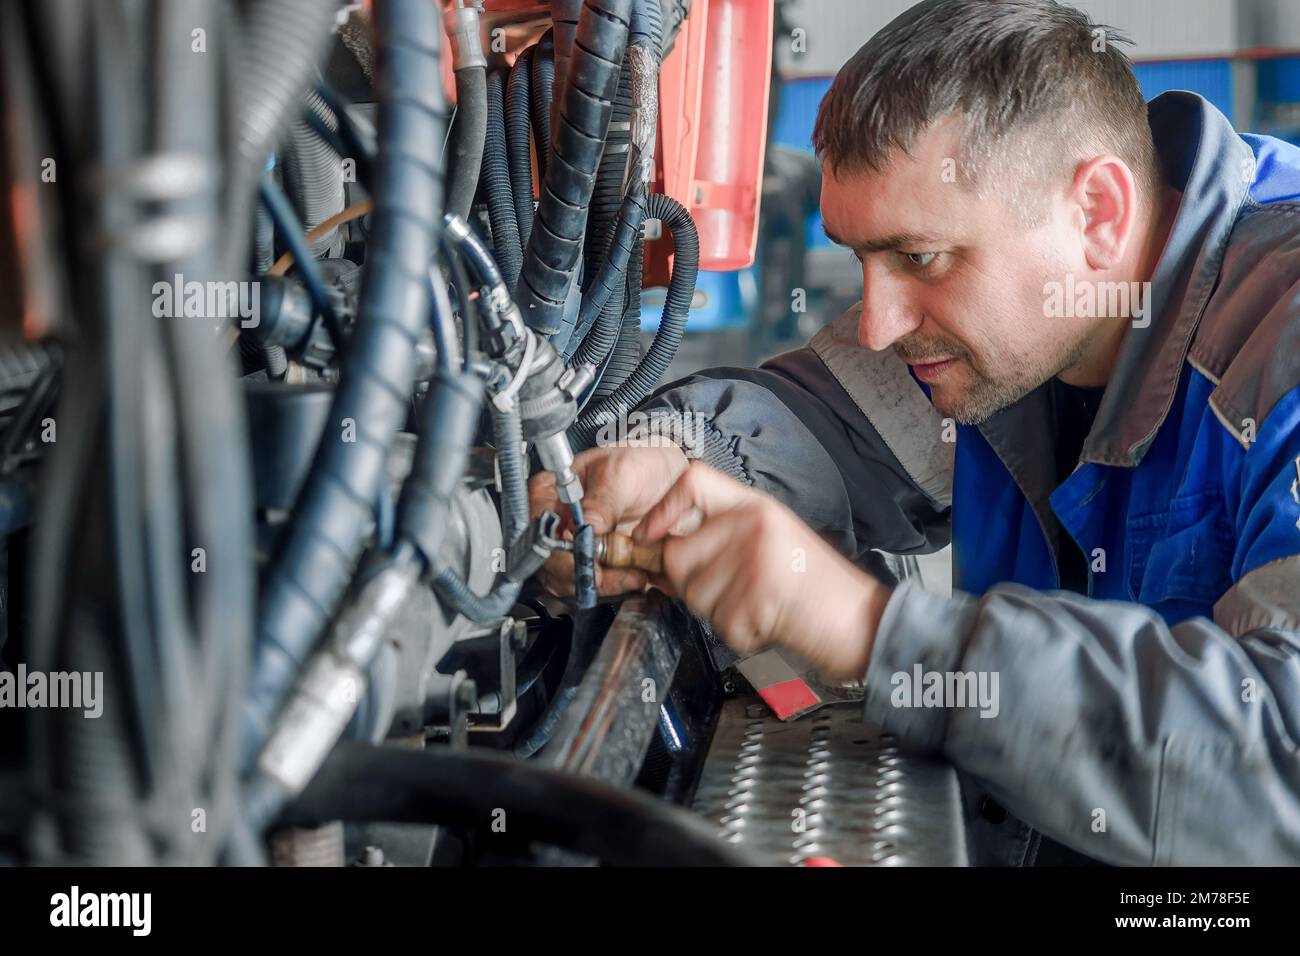 Car mechanic repairs large truck or tractor in workshop. Professional mechanic repairs truck engine. Genuine worker.. Stock Photo